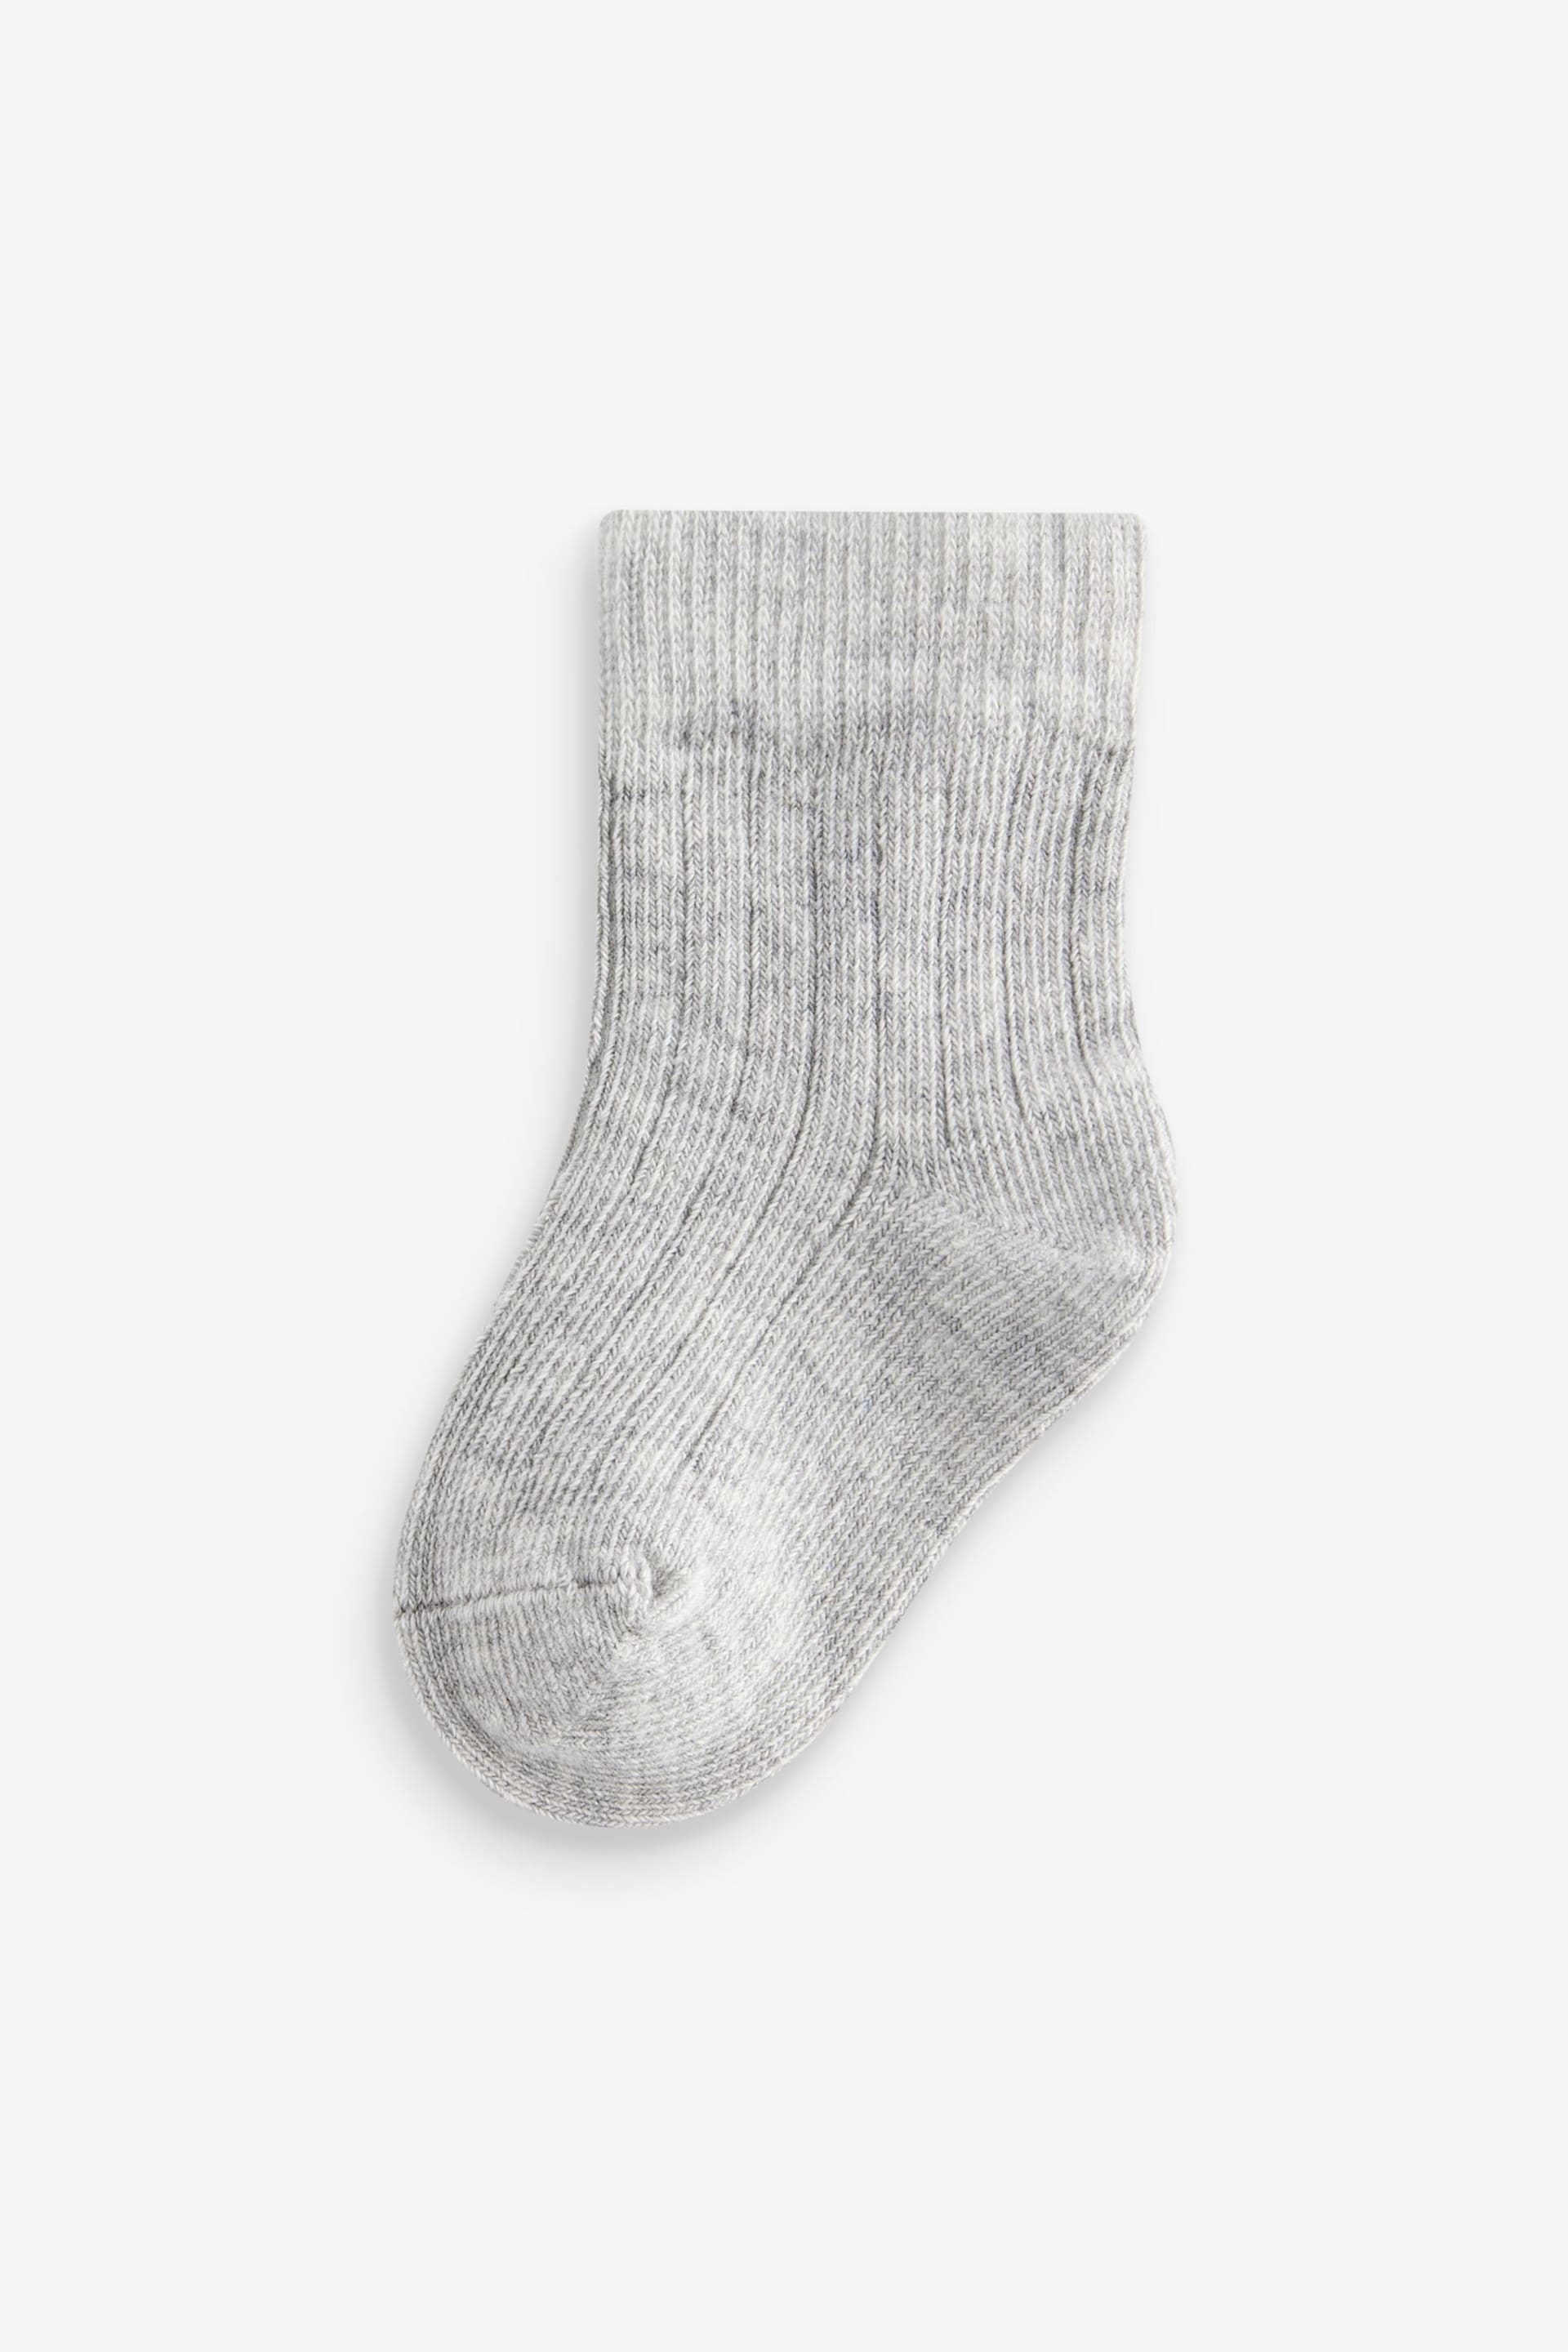 Grey Baby Socks 4 Pack (0mths-2yrs) - Image 5 of 5